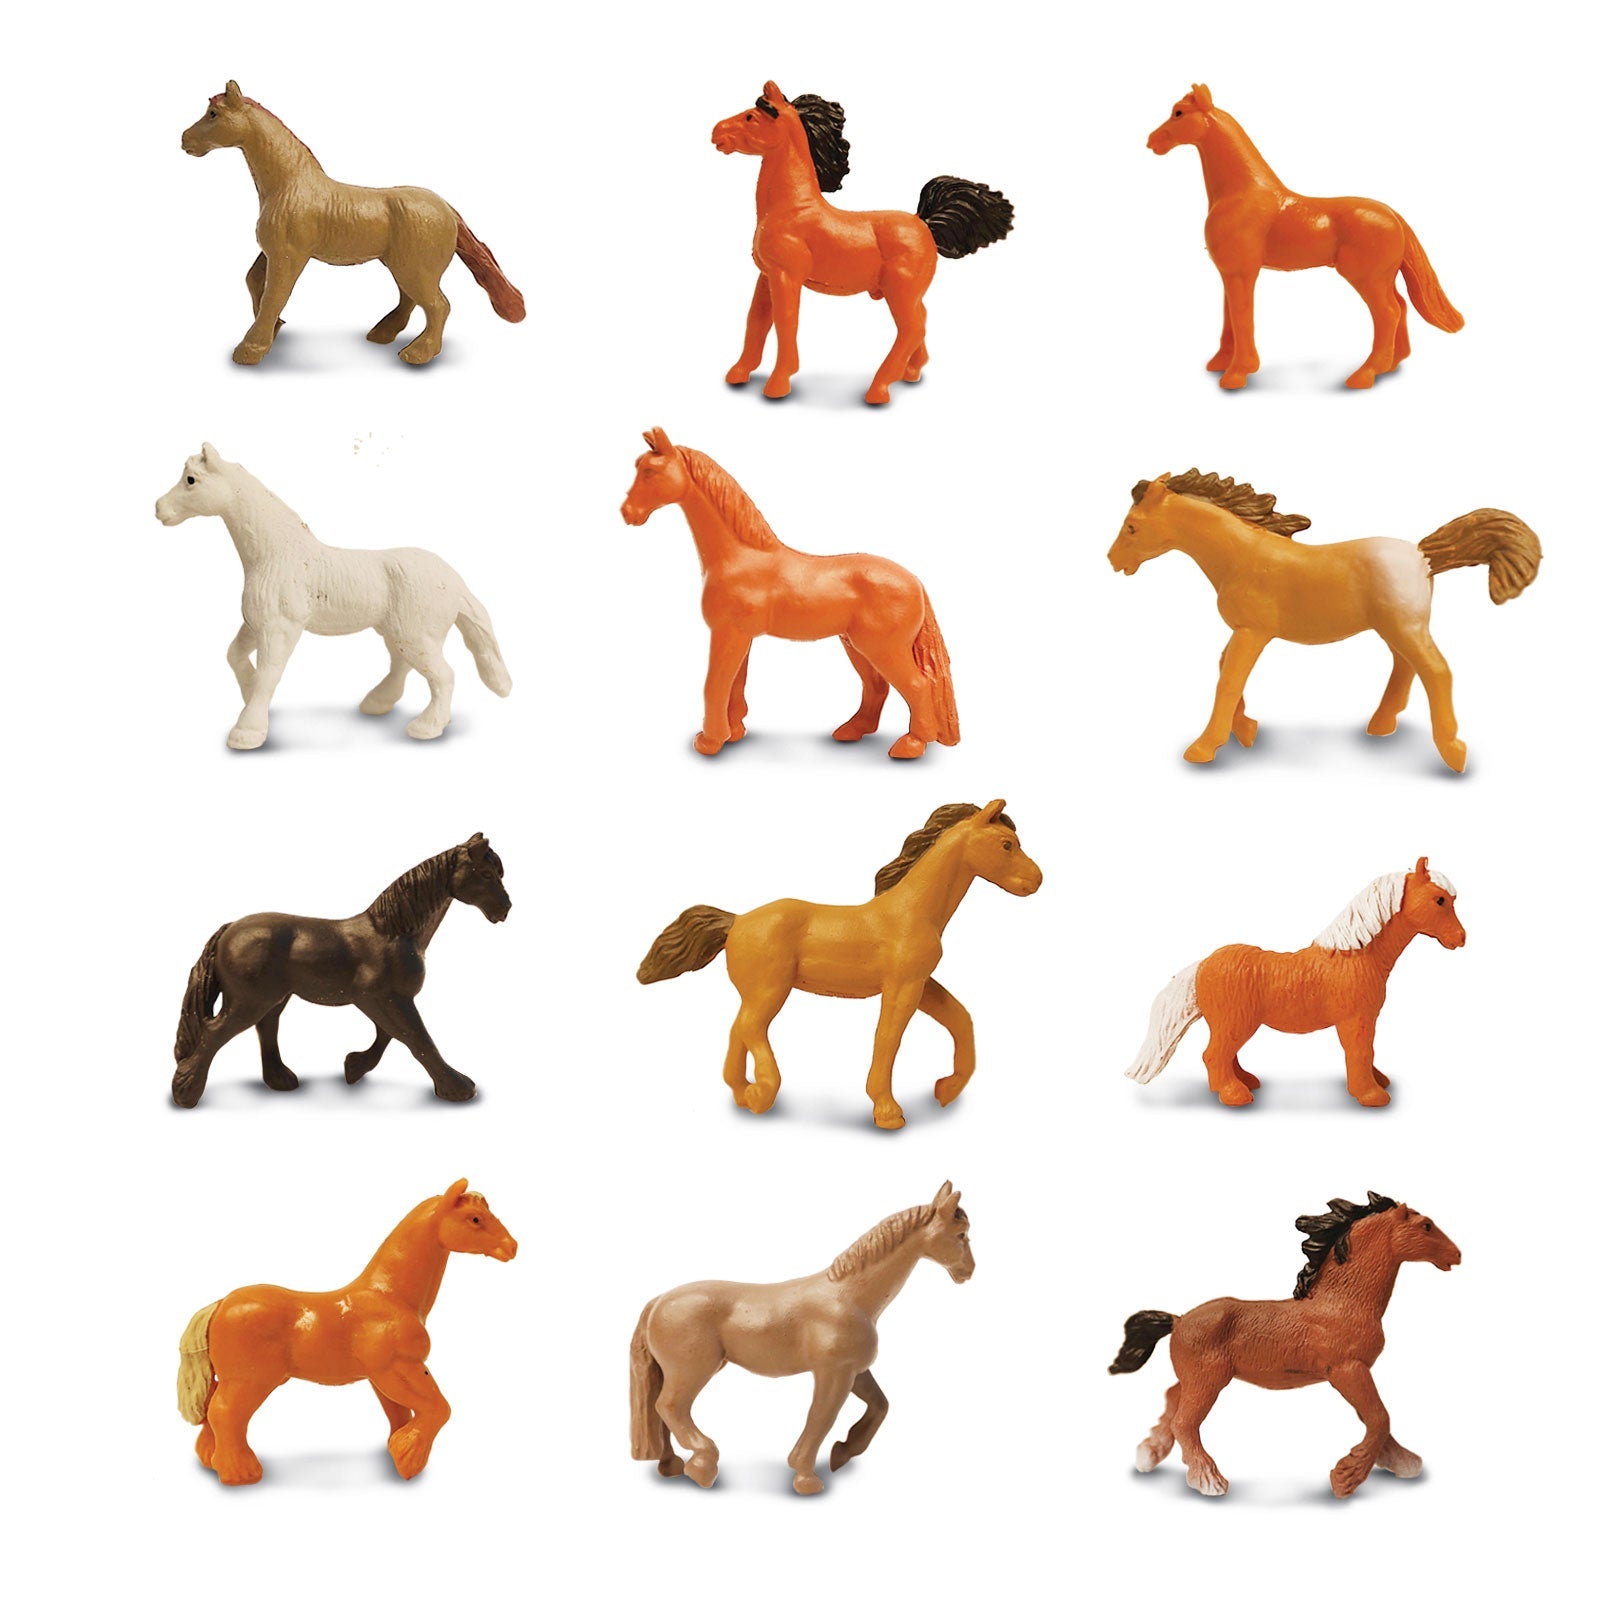 Safari Ltd: Figuras en caballos tubá Horse Toob 12 PC.